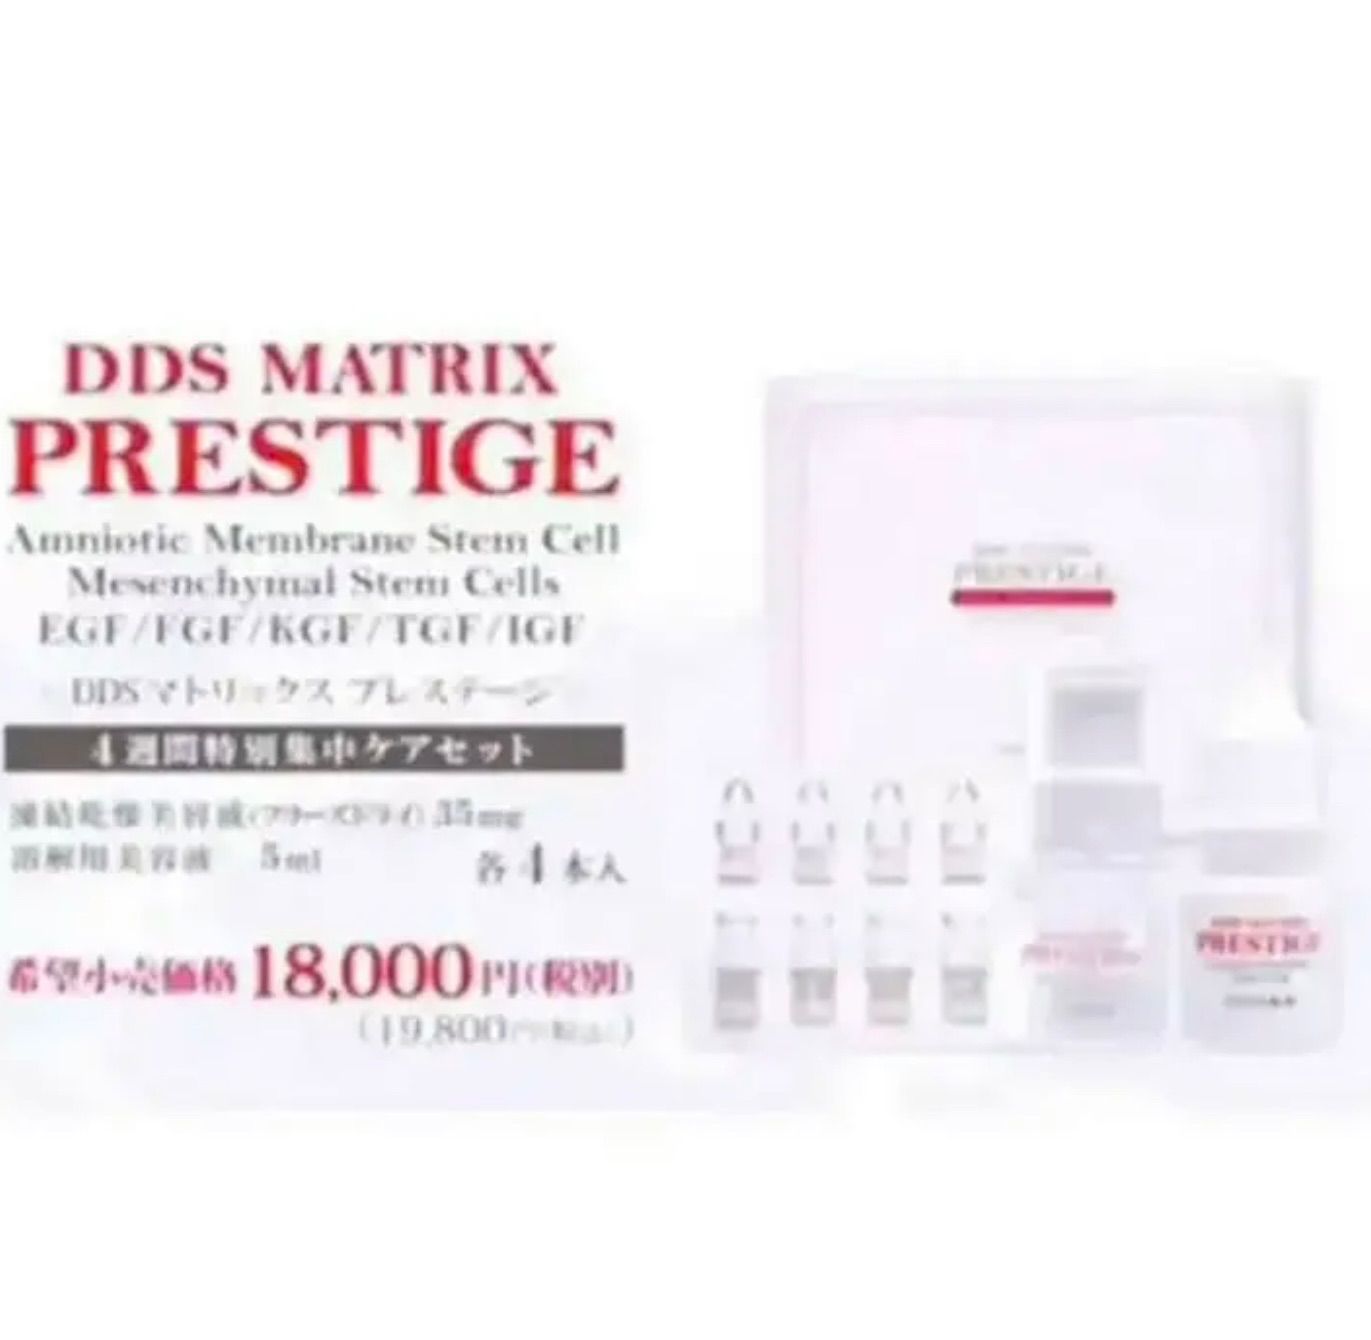 DDSマトリックス プレステージ 幹細胞美容液 20ml 定価19,800円 - 基礎